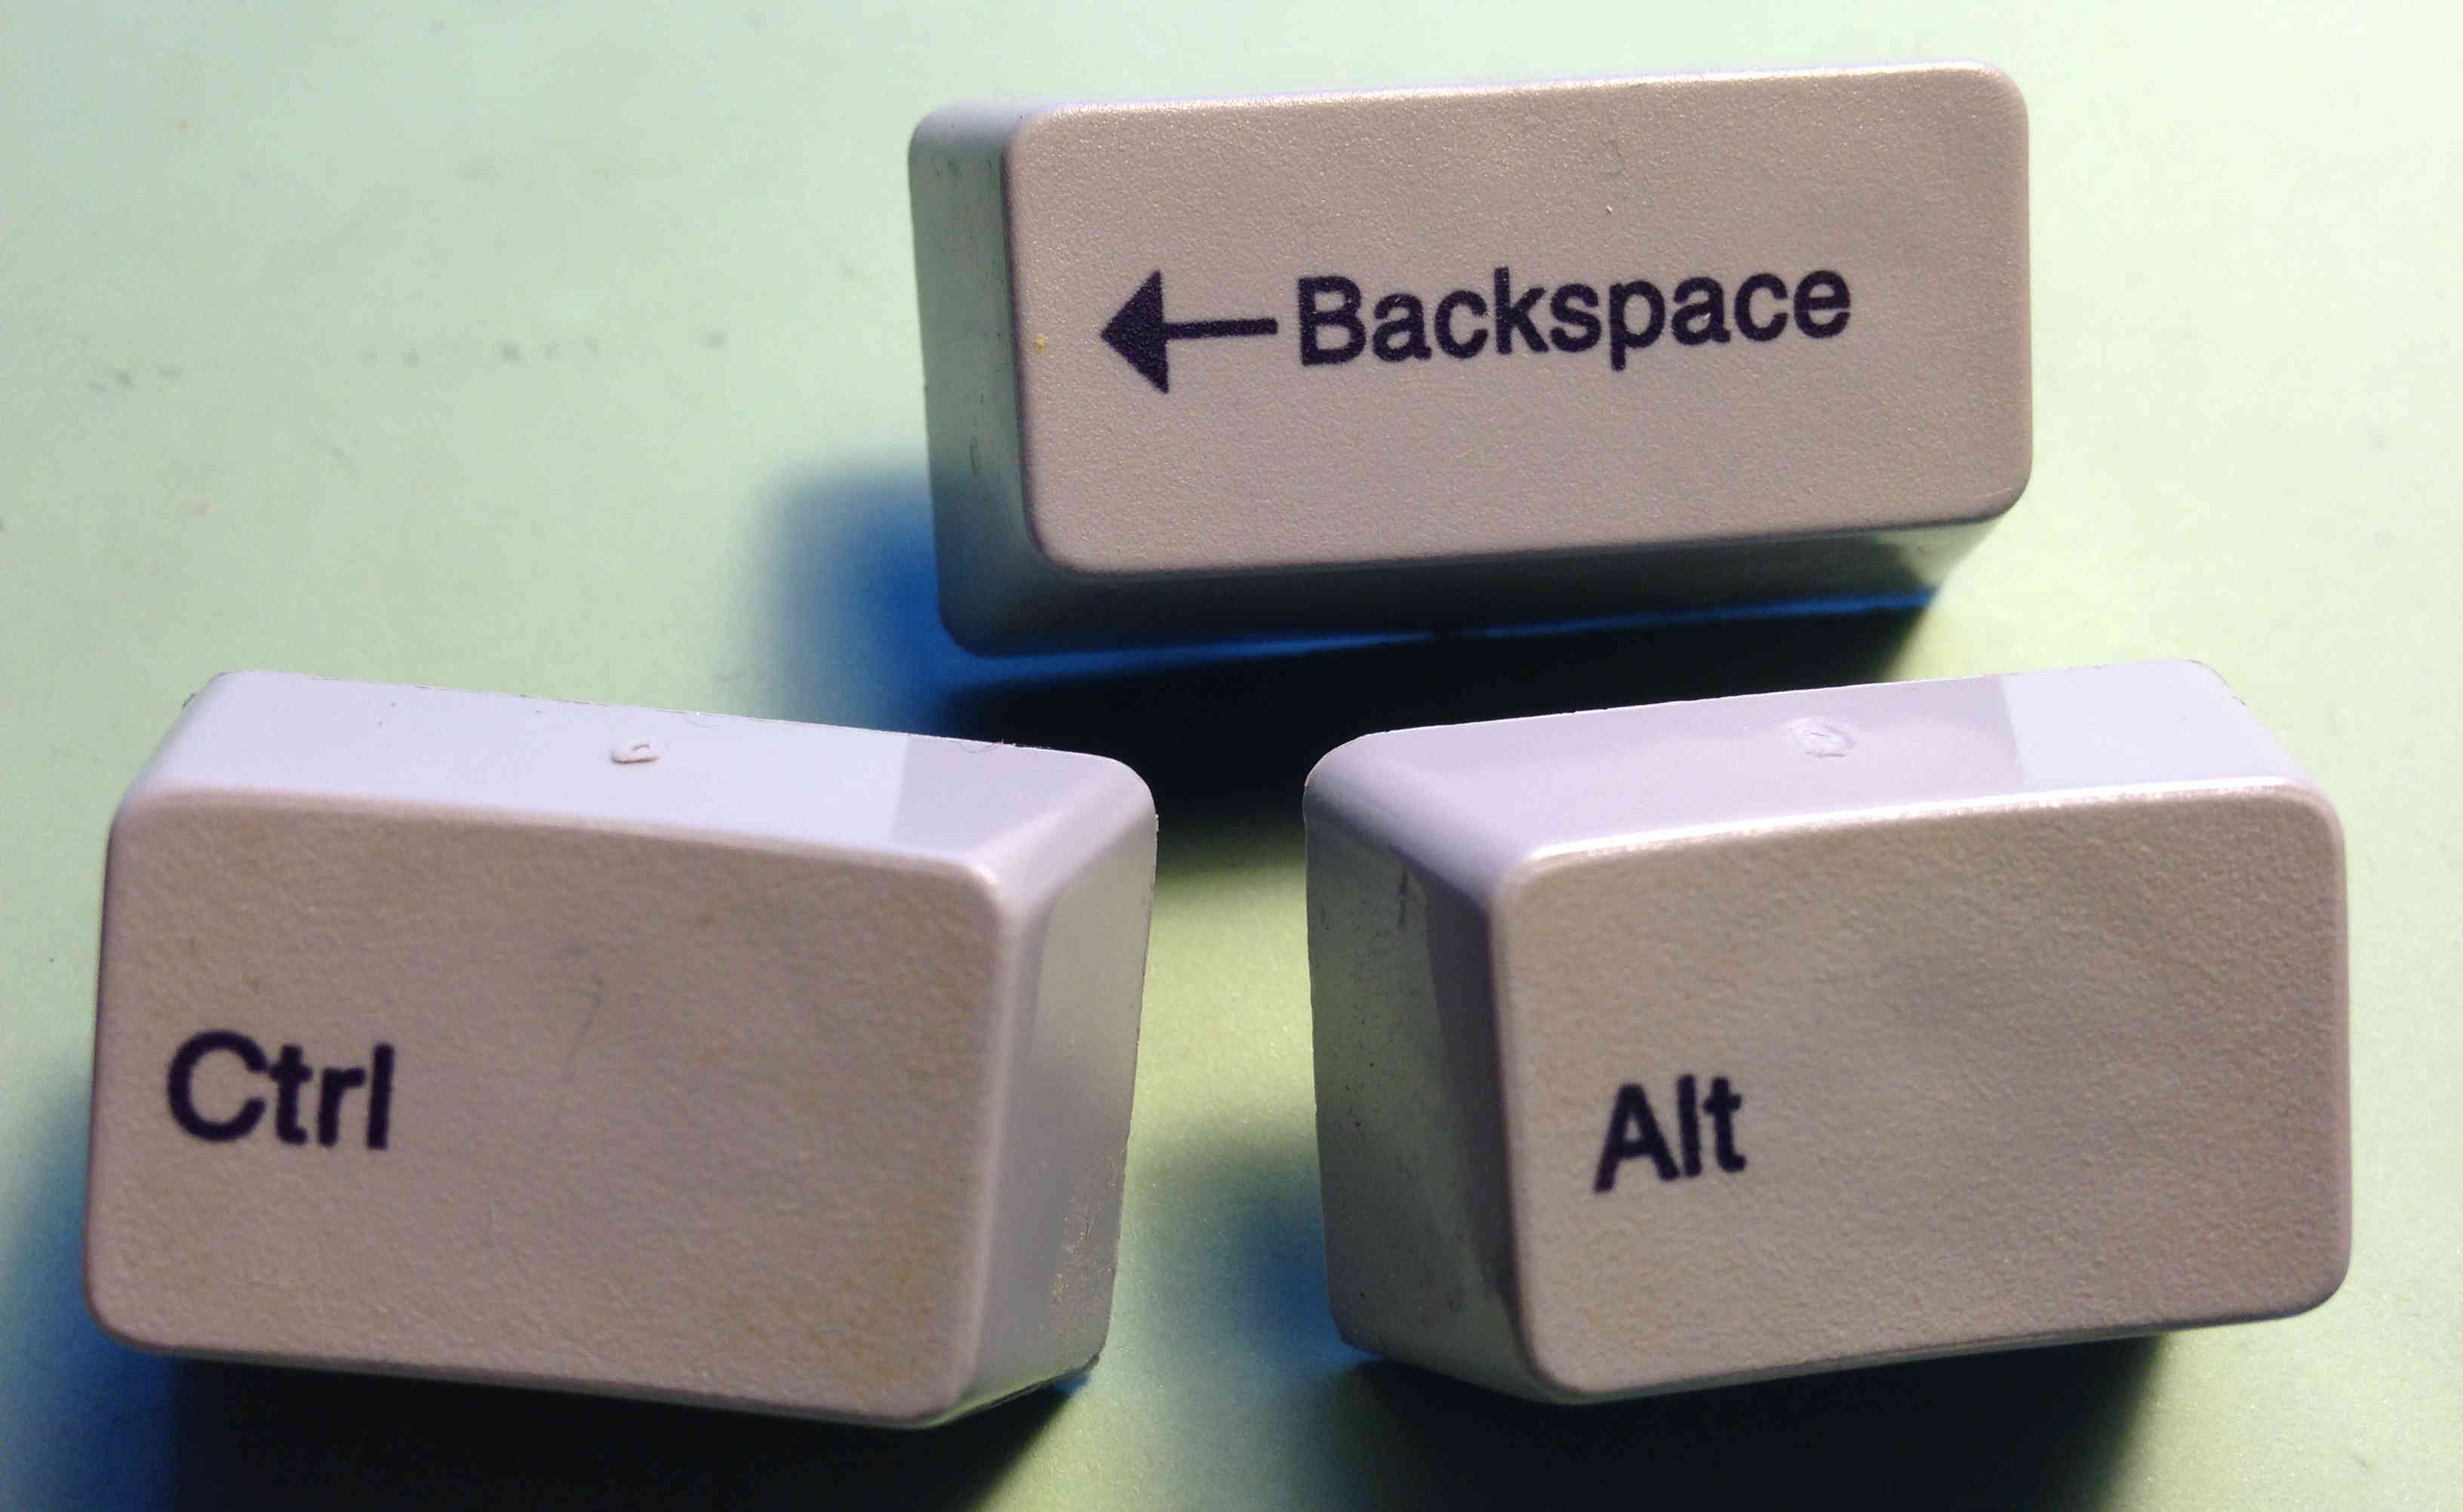 Keys arranged to spell out Control-Alt-Backspace.